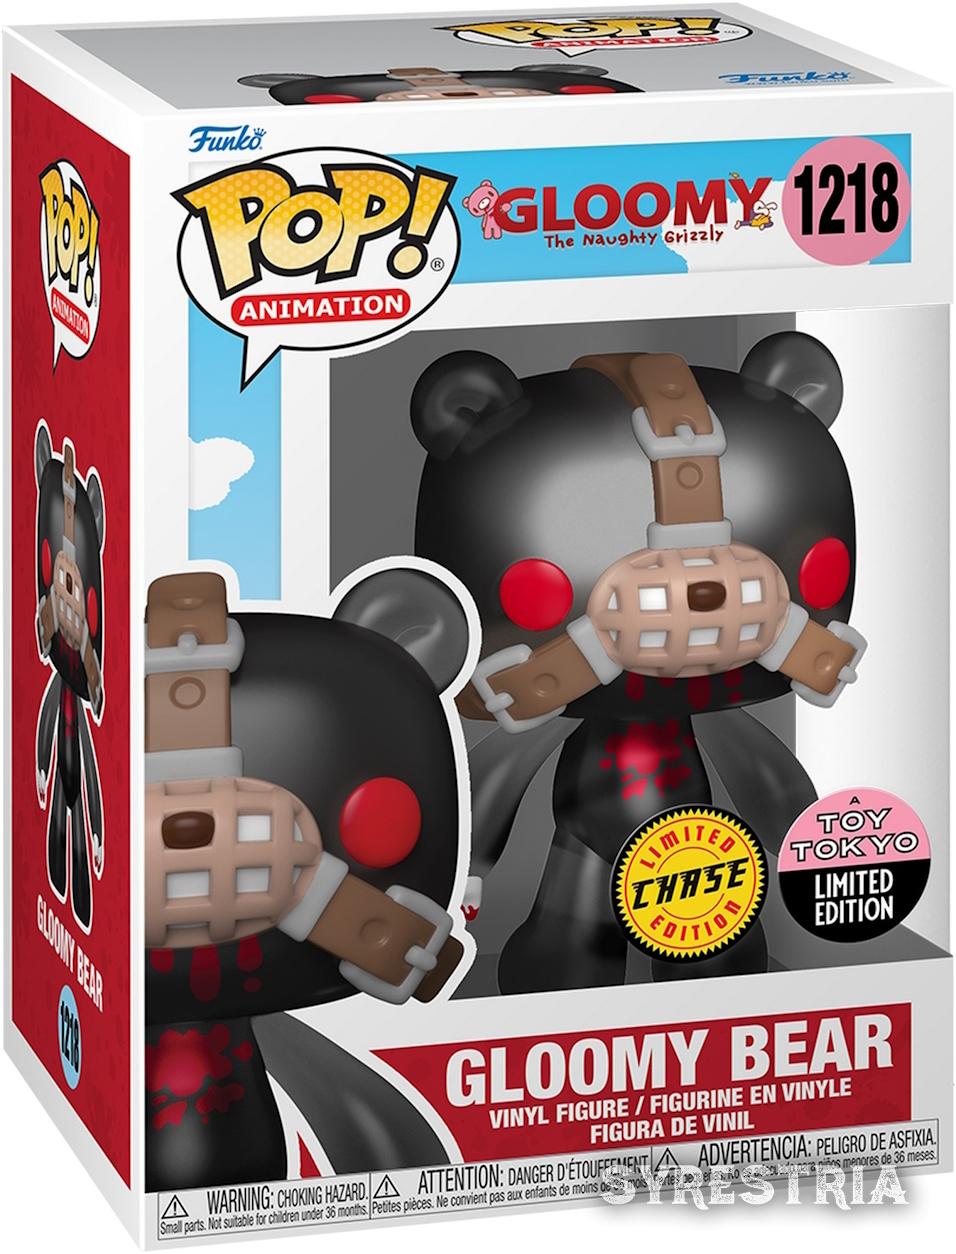 Gloomy - Gloomy Bear 1218 Chase Toy Tokyo Limited Edition - Funko Pop! Vinyl Figur